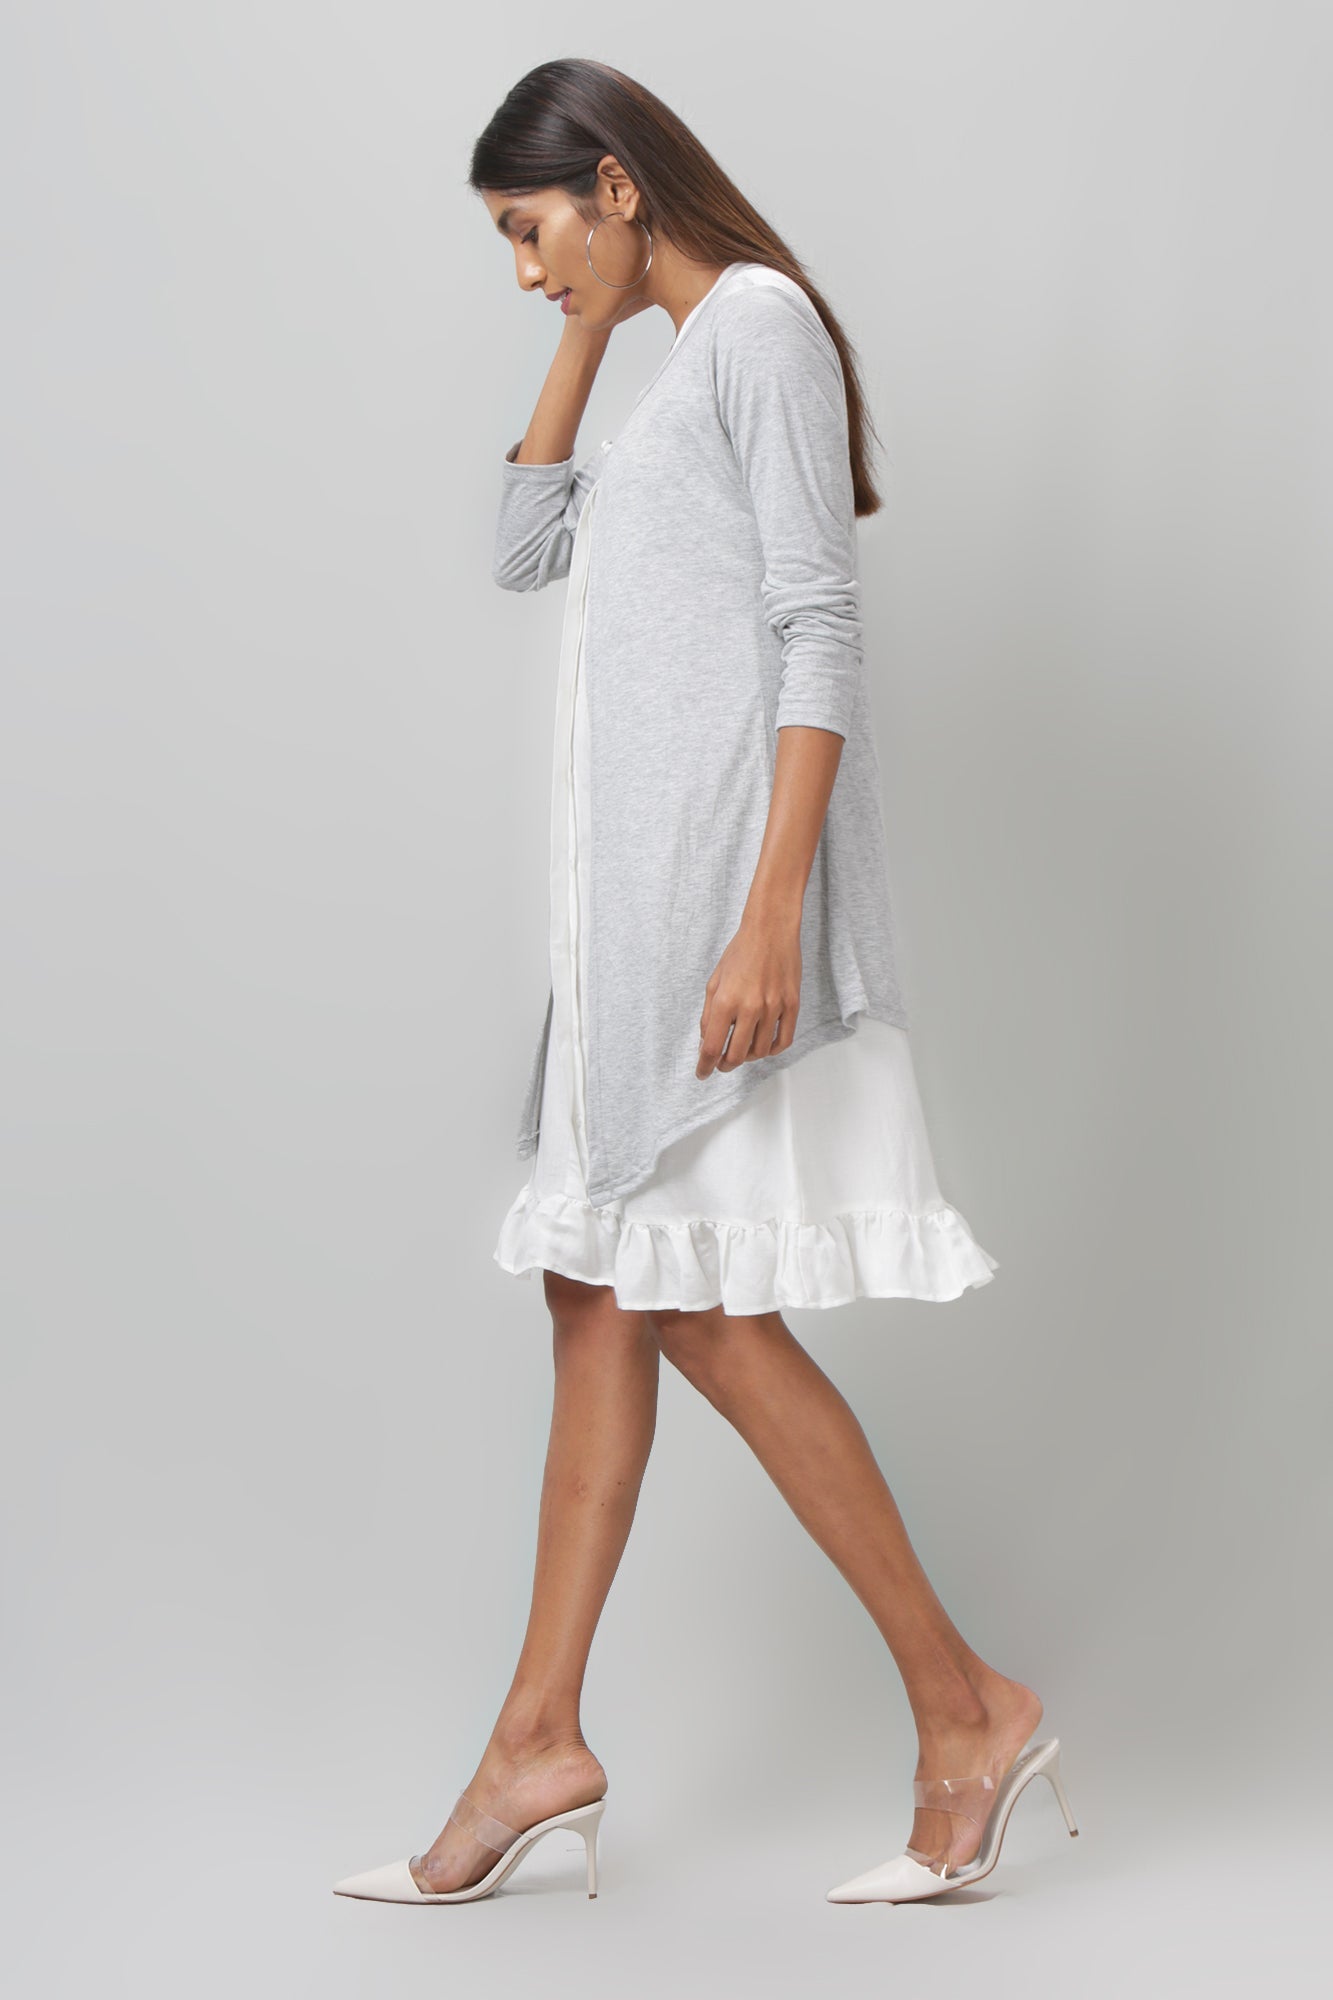 White dress with grey short shrug - WomanLikeU